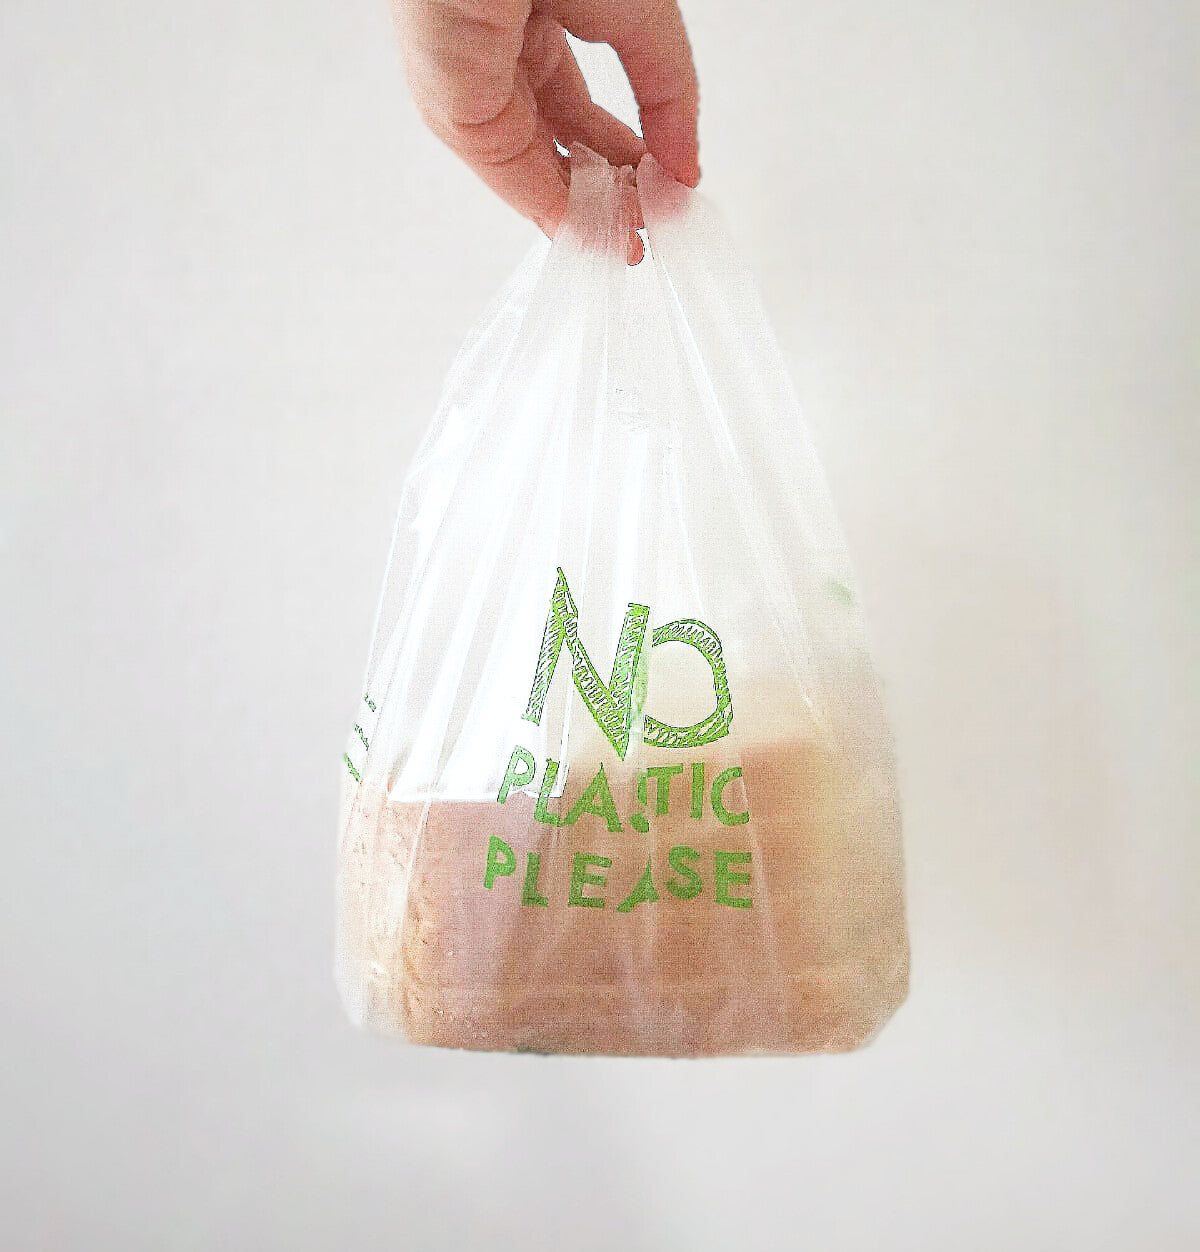 Size XS 17 Groceries/Packaging/Trash T-Shirt Bag